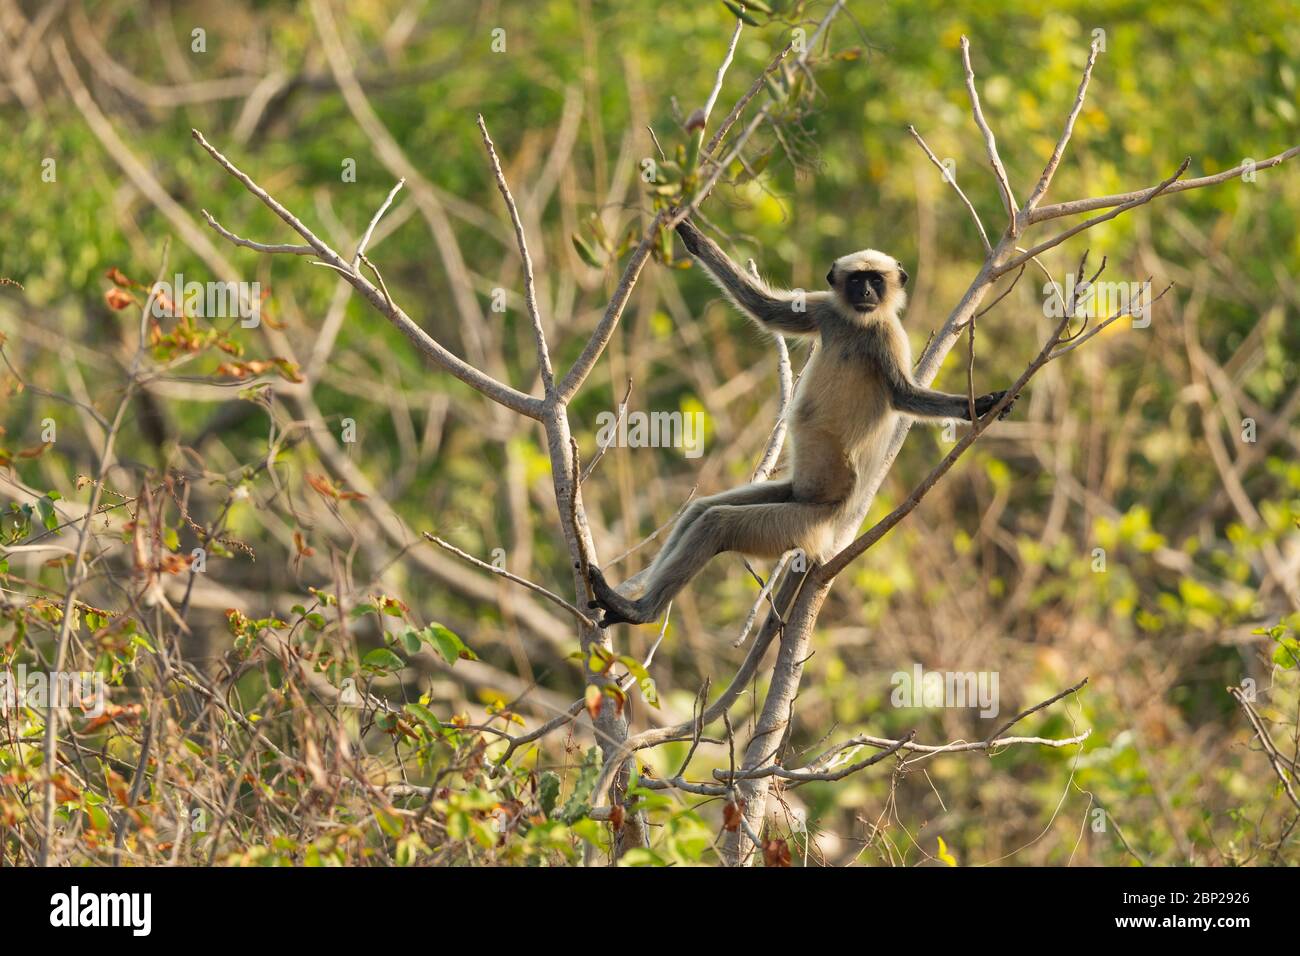 Black-footed grey langur Semnopithecus hypoleucos, resting in tree, Arambol, Goa, India, January Stock Photo